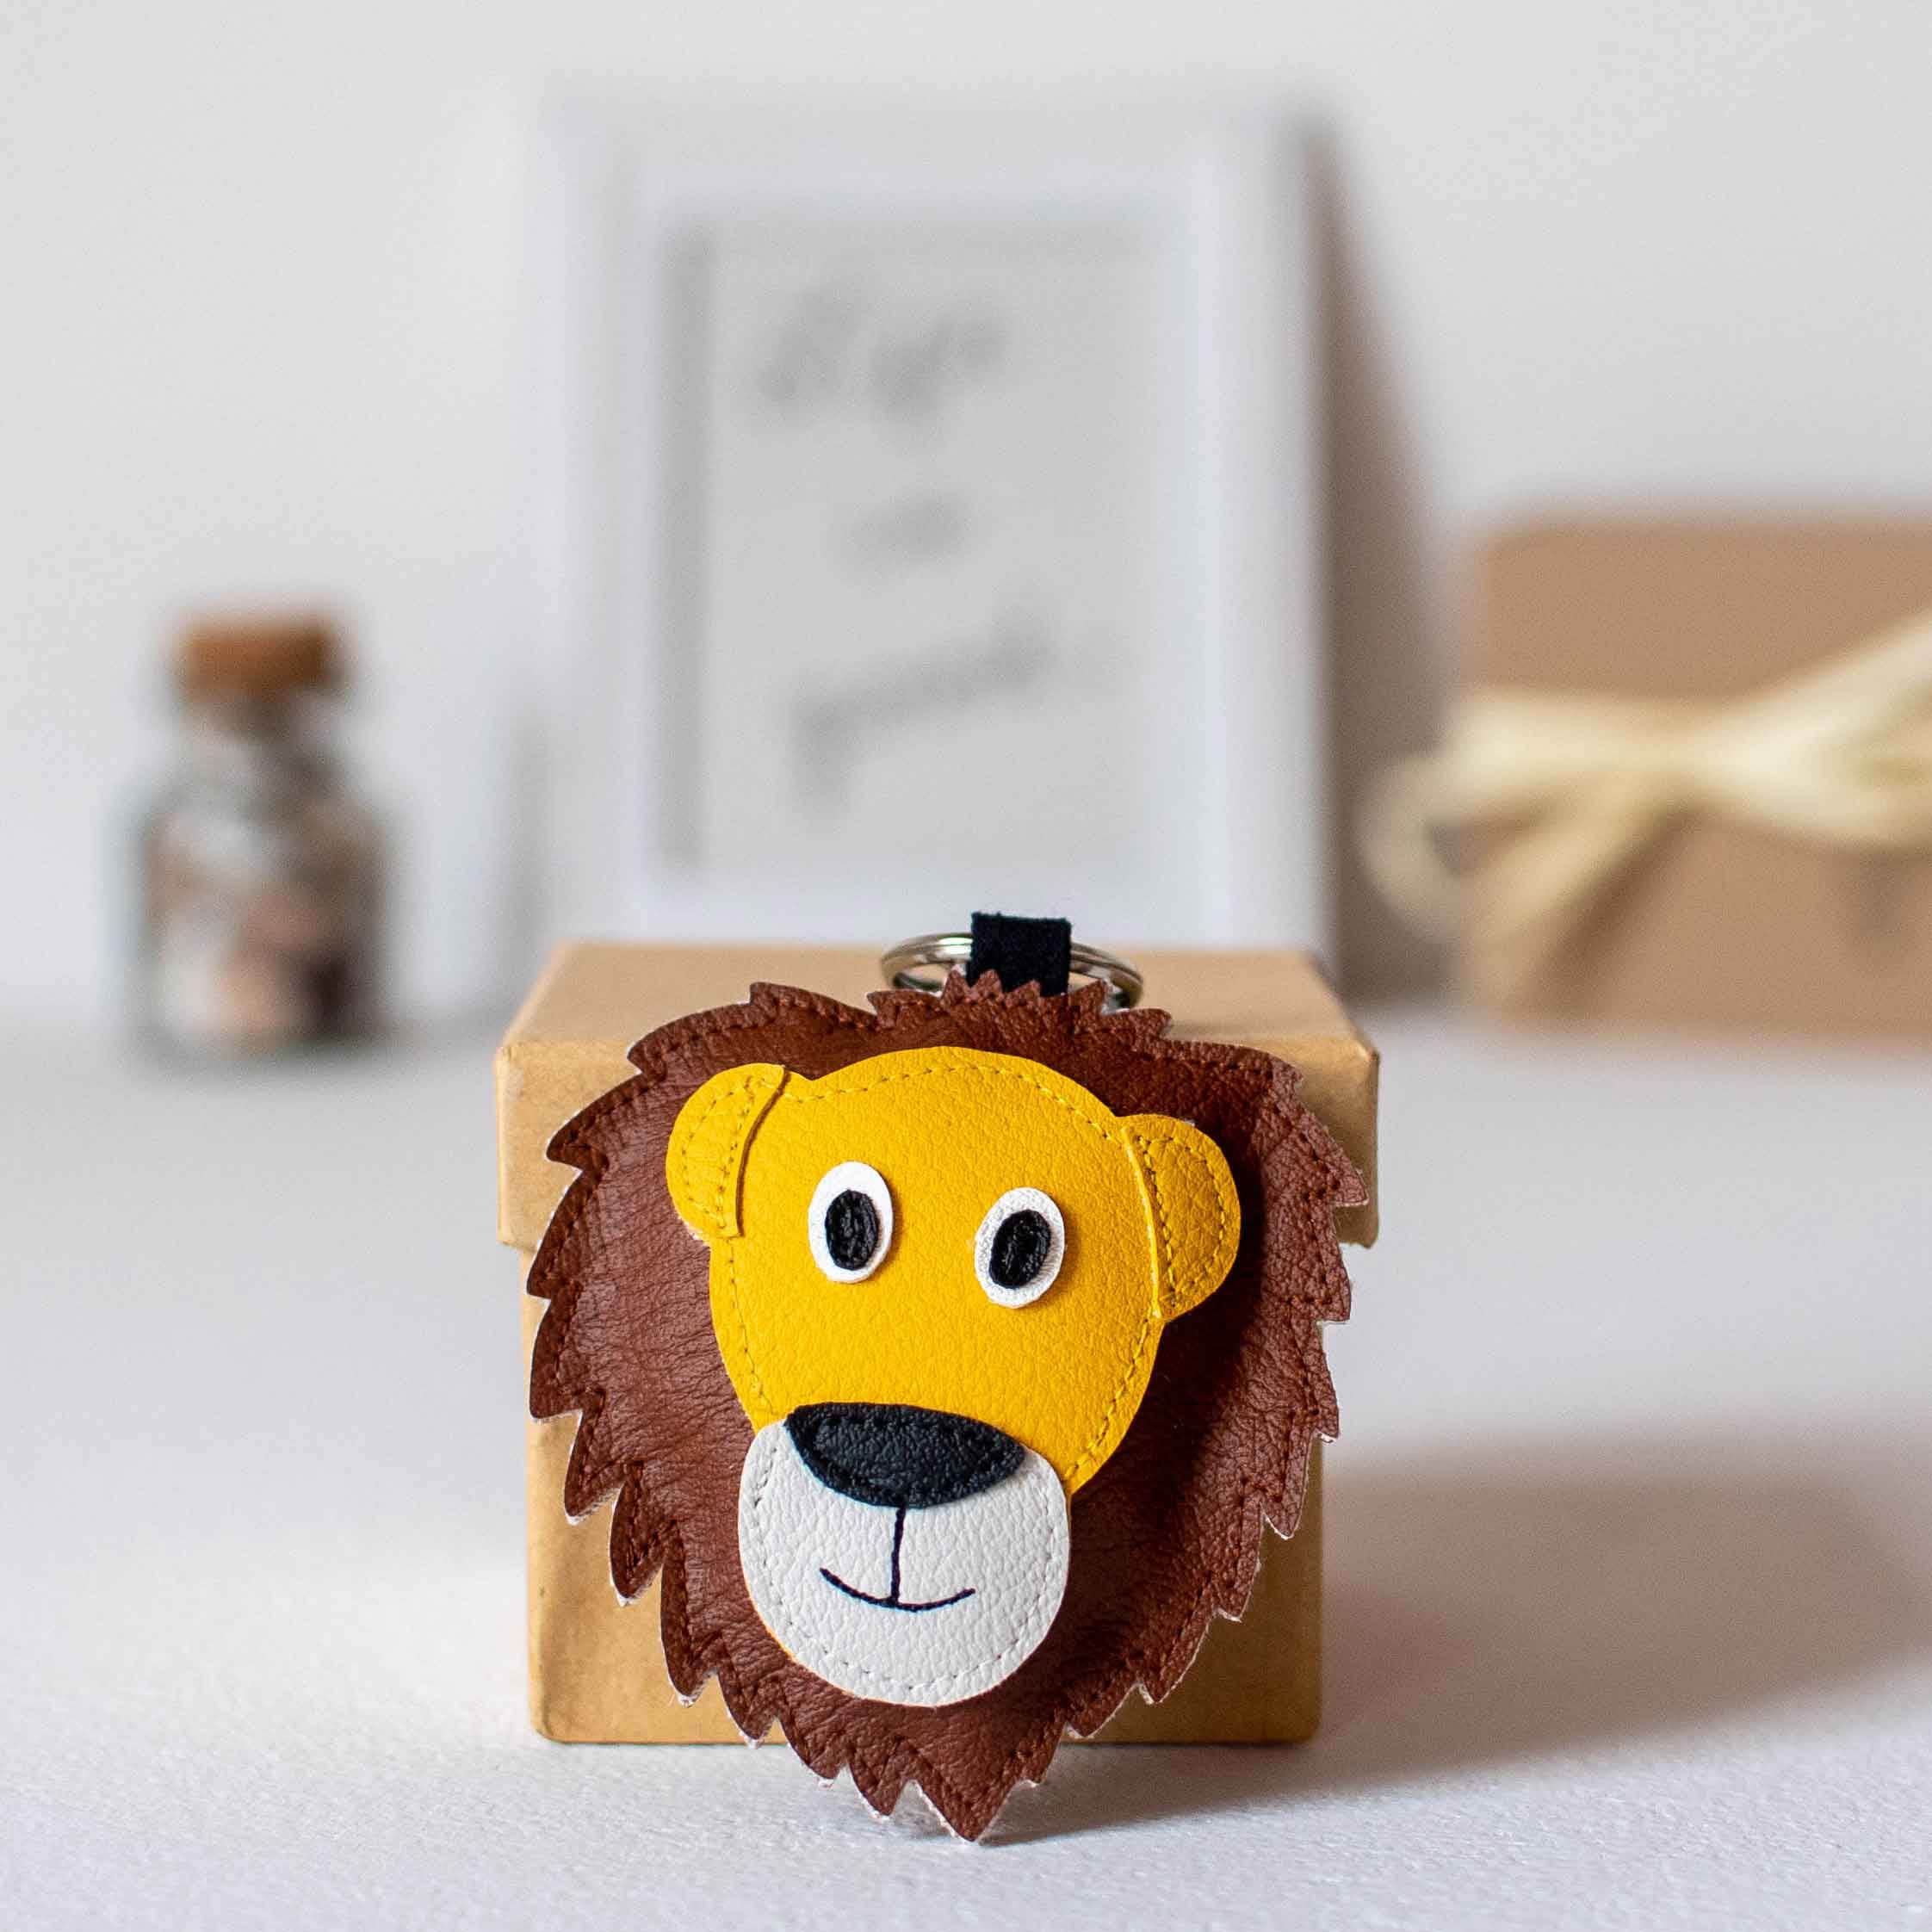 Louis Vuitton Lion shape Animal key chain for 2020 Christmas gift